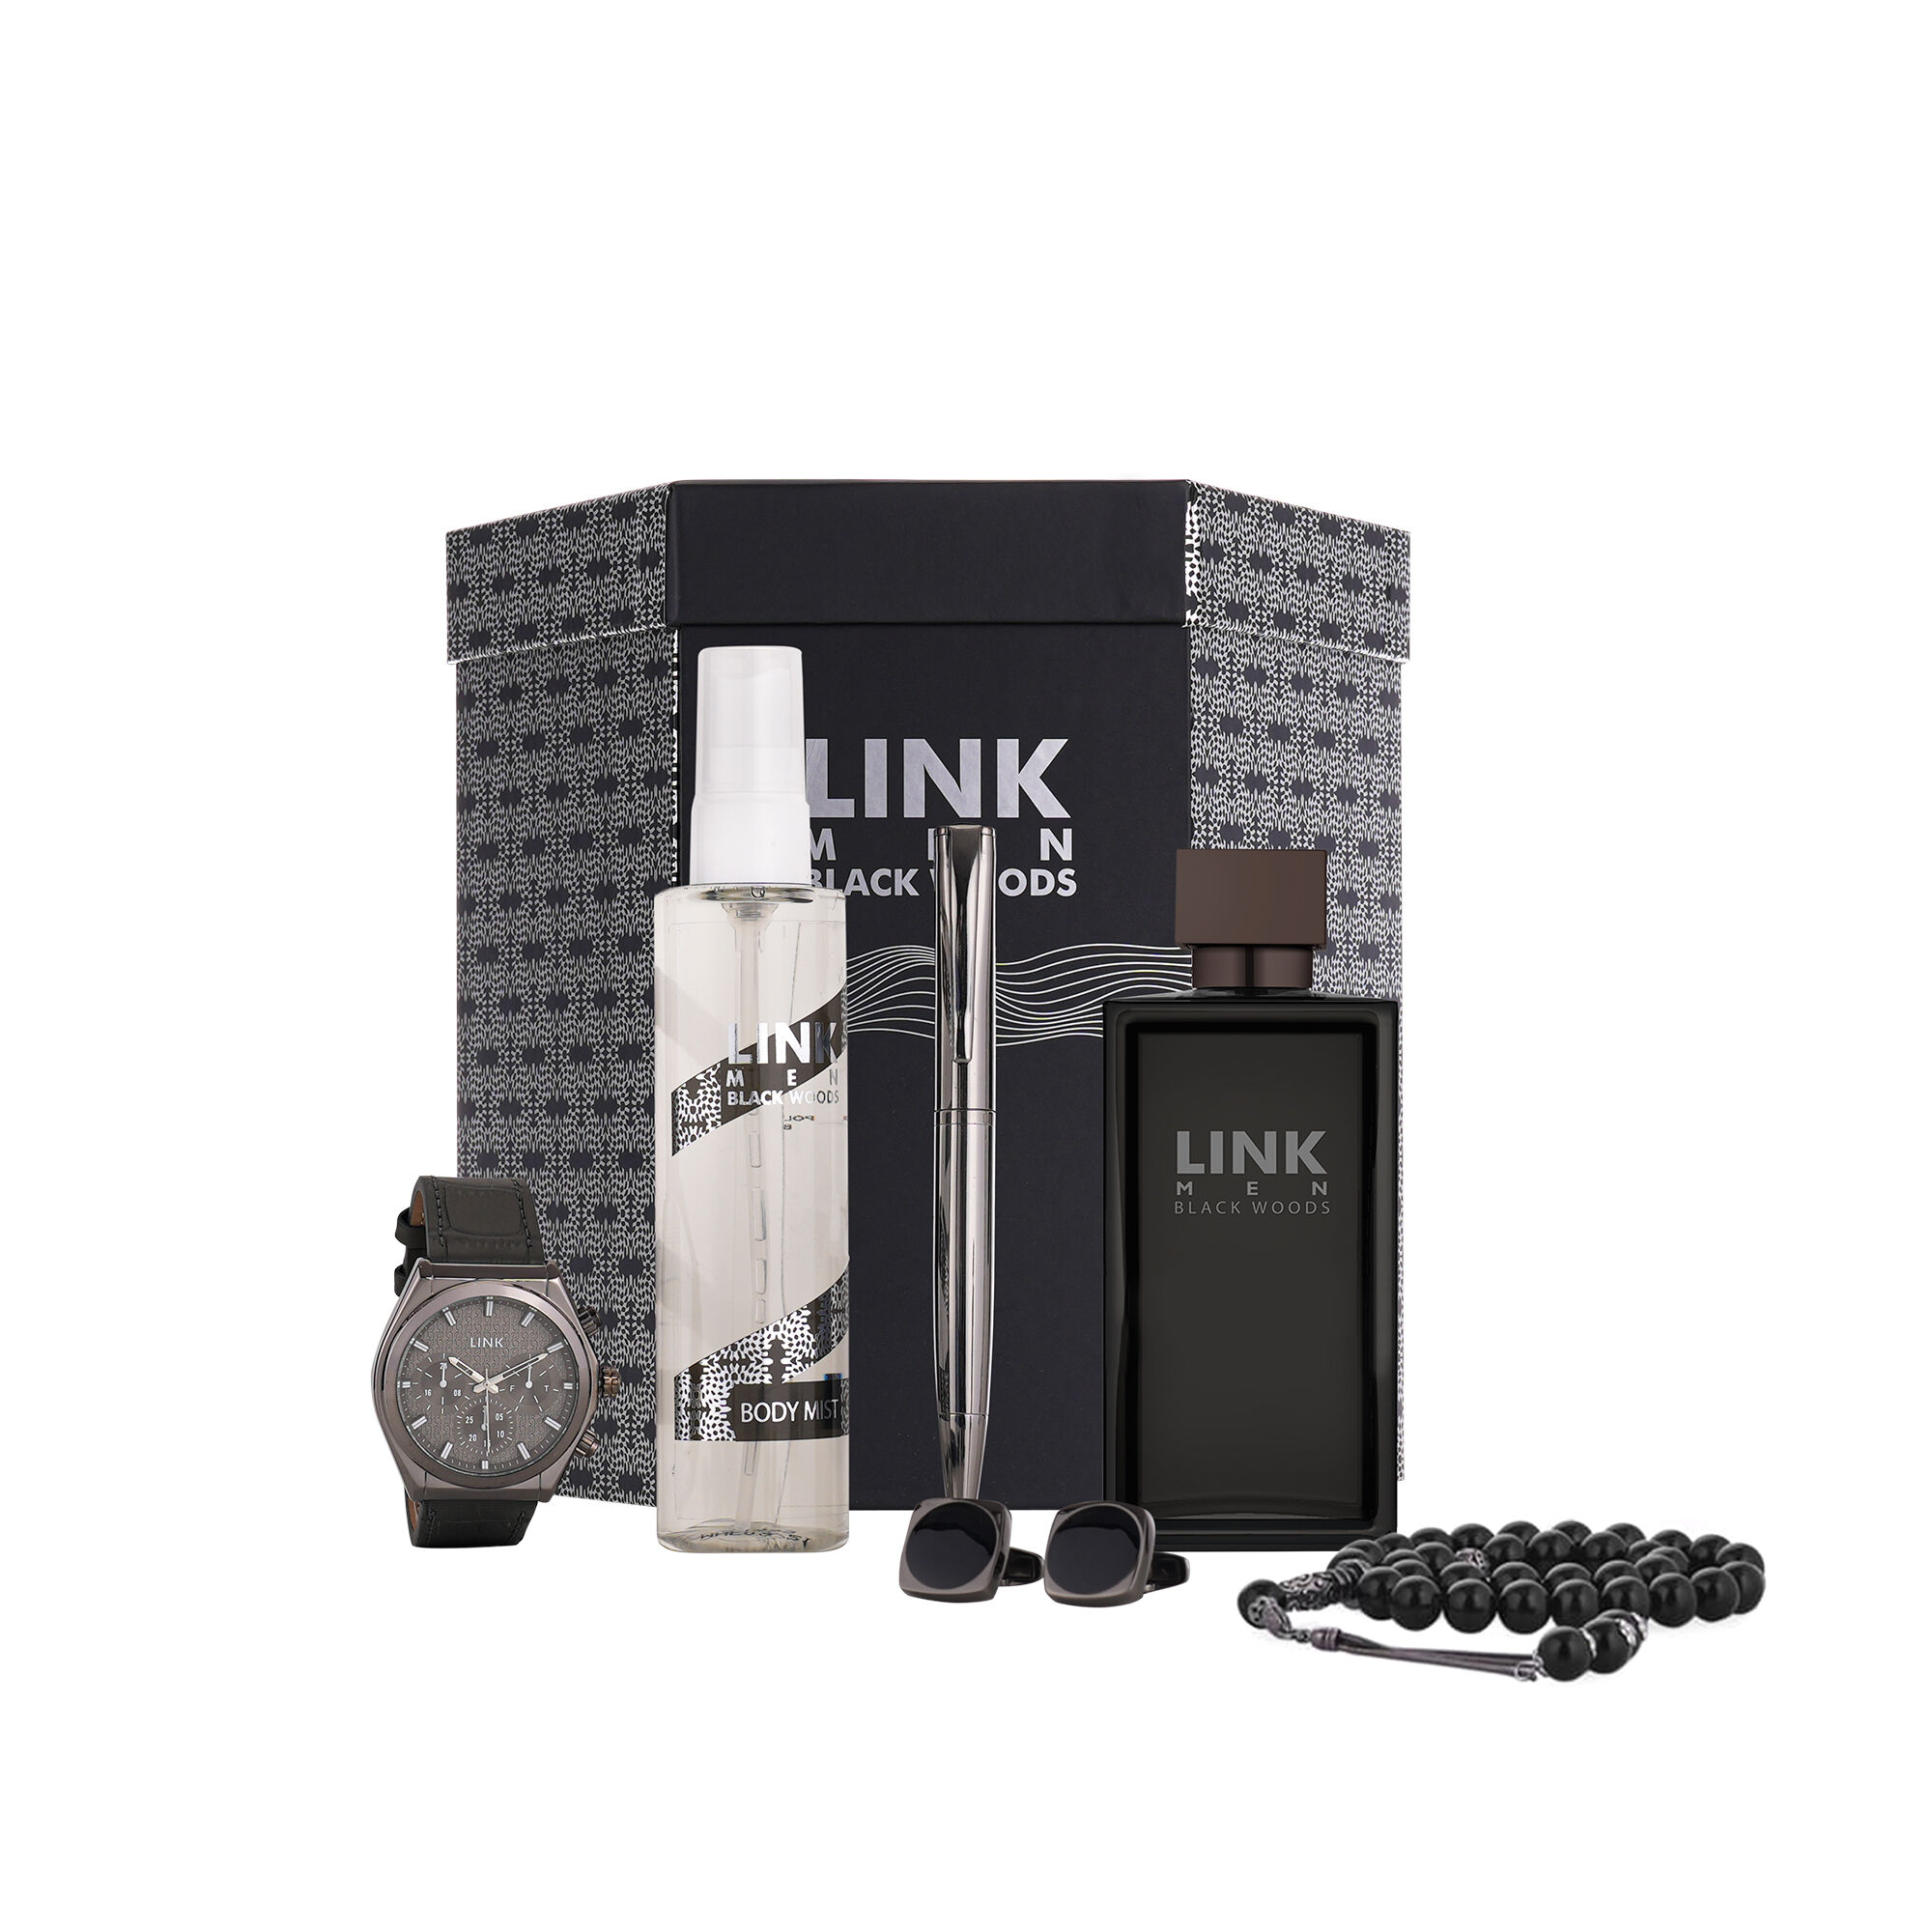 Black Link Men's accessories gift set